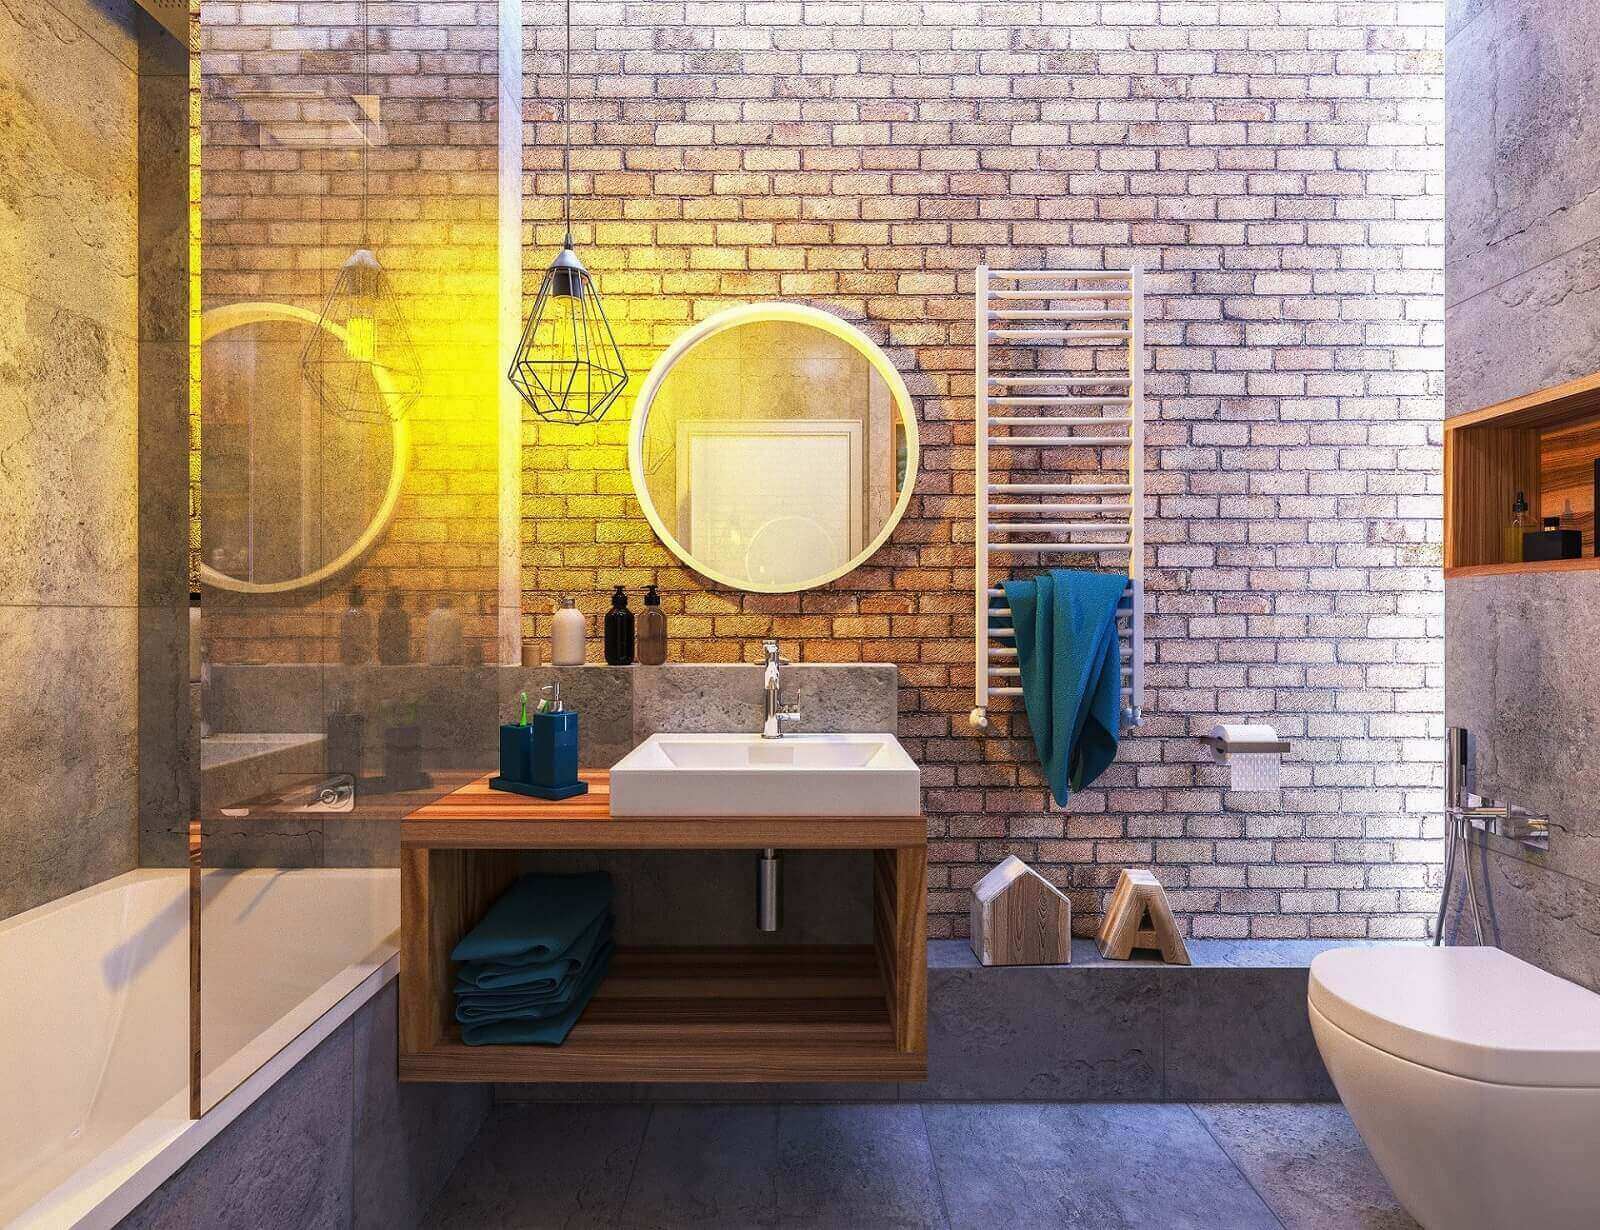 Small Bathroom Ideas 2021 2022 Trends, Small Bathrooms Ideas 2021